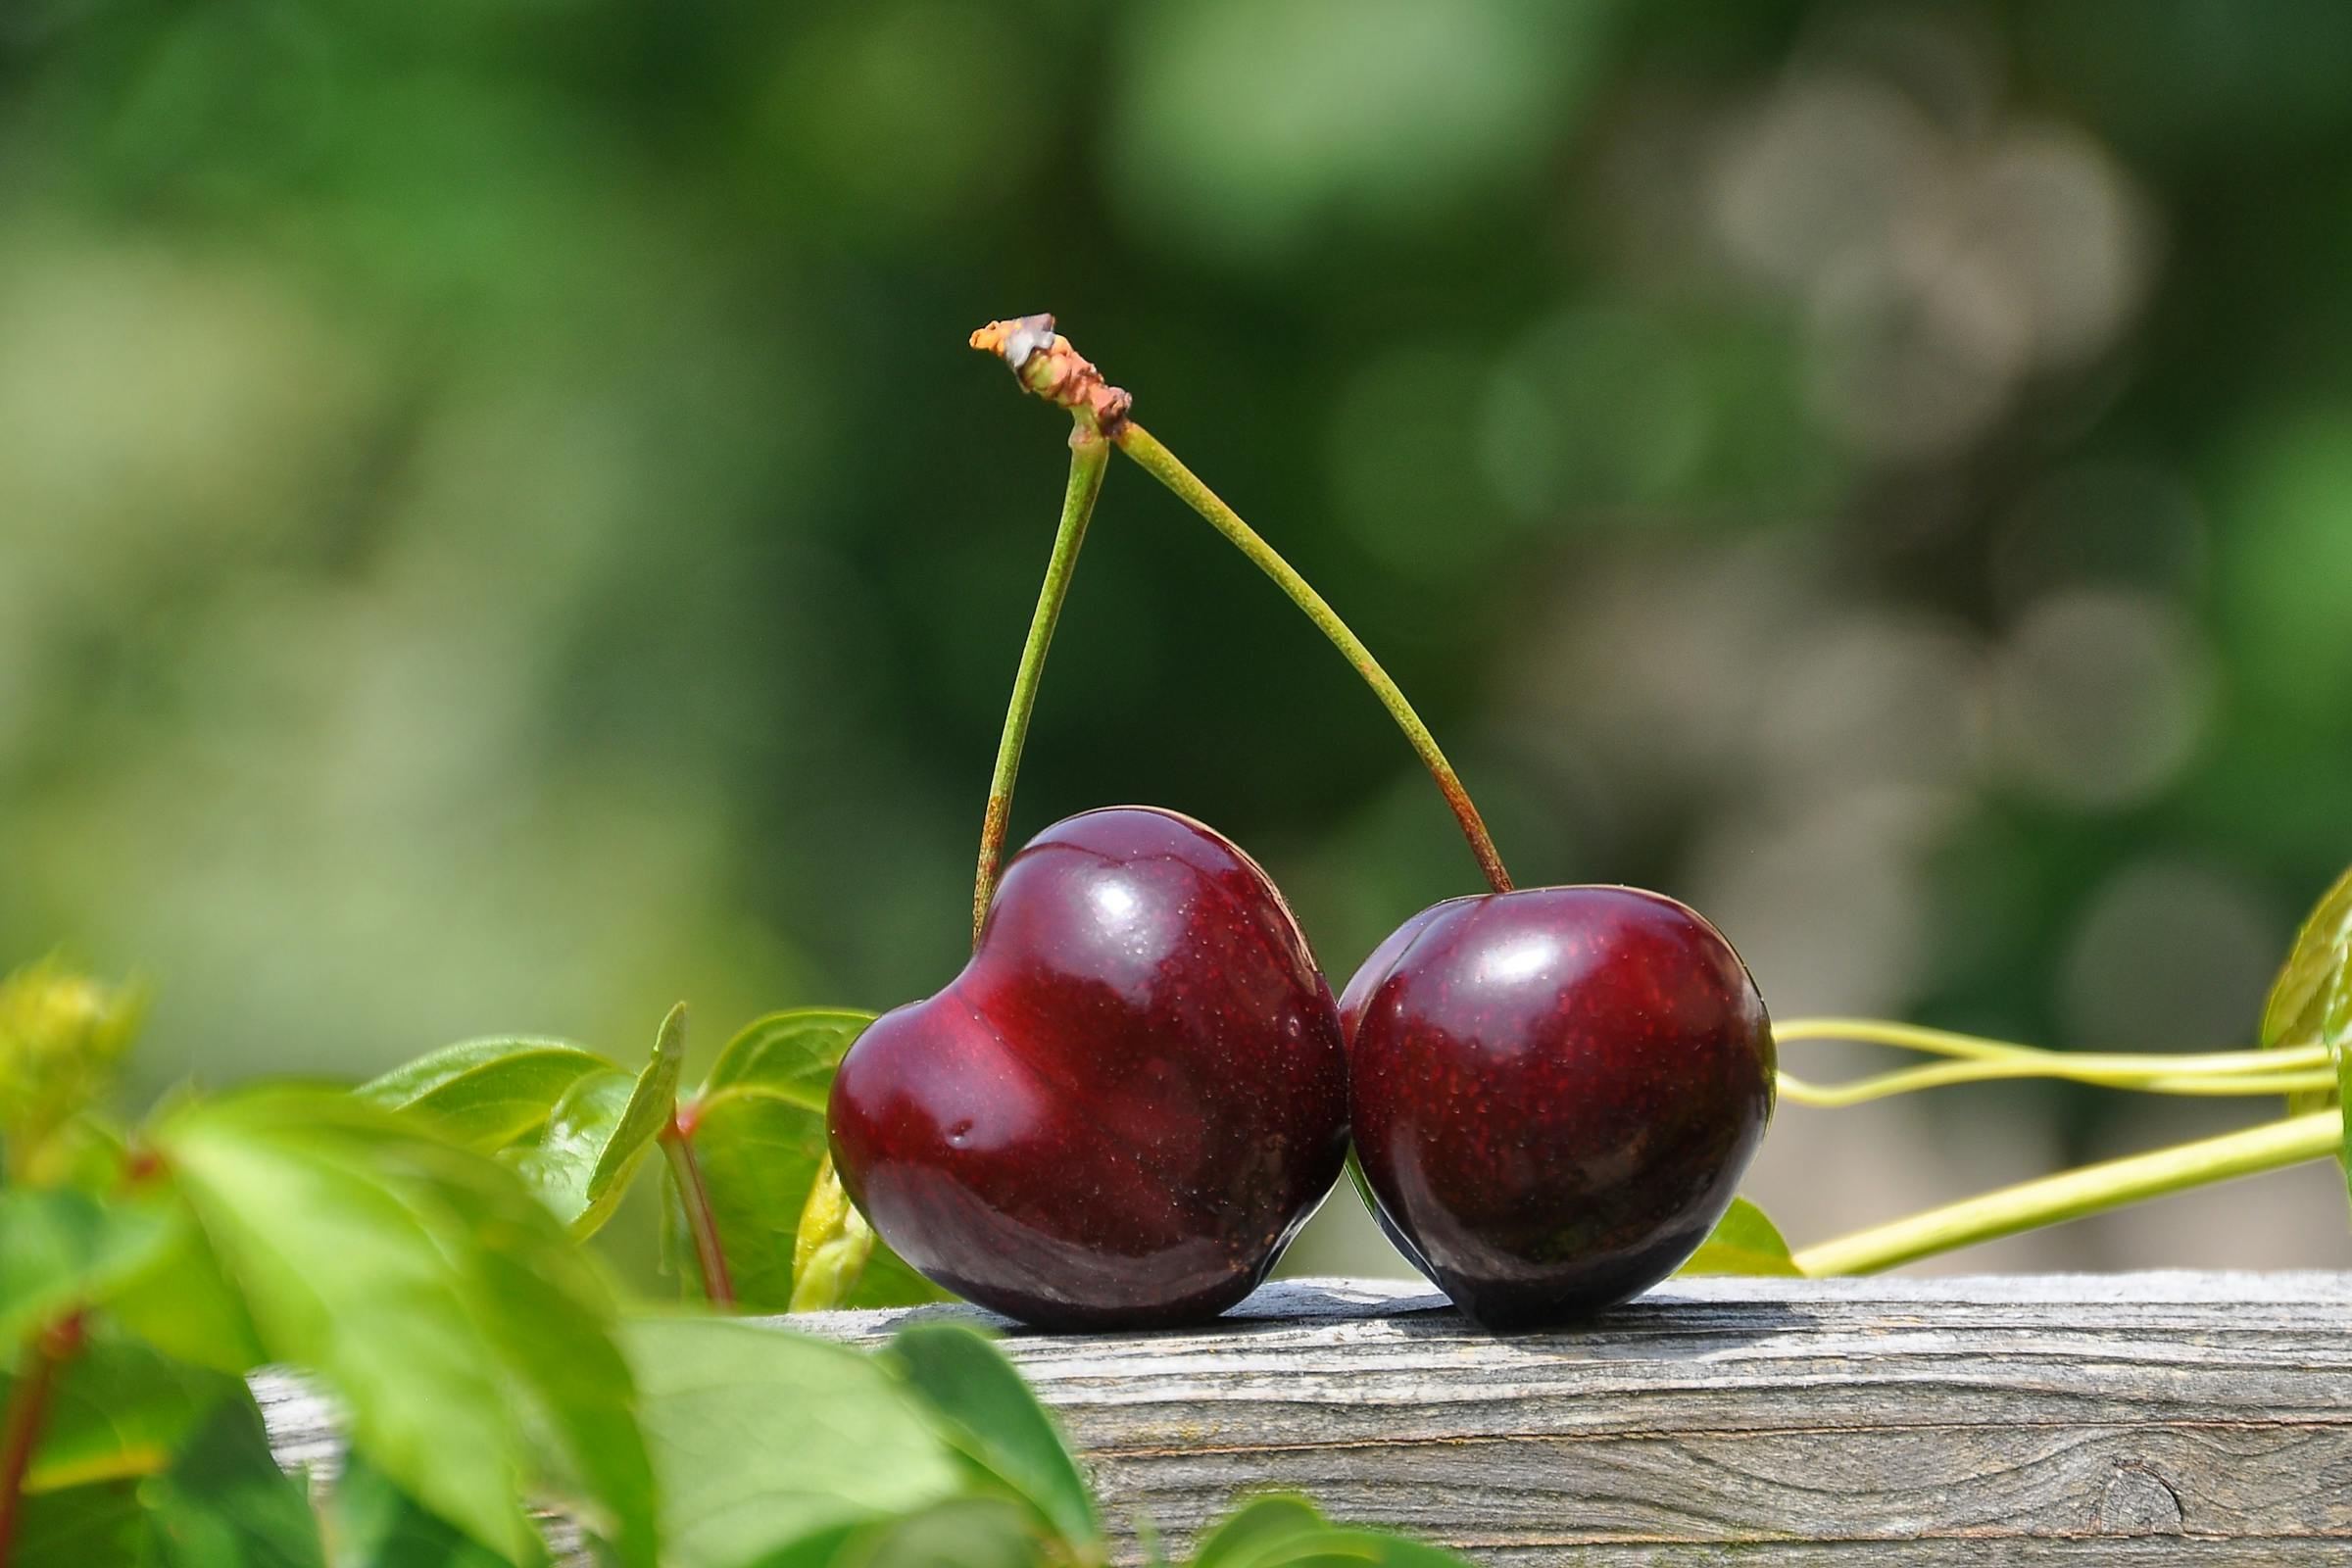 Two cherries sitting on wood